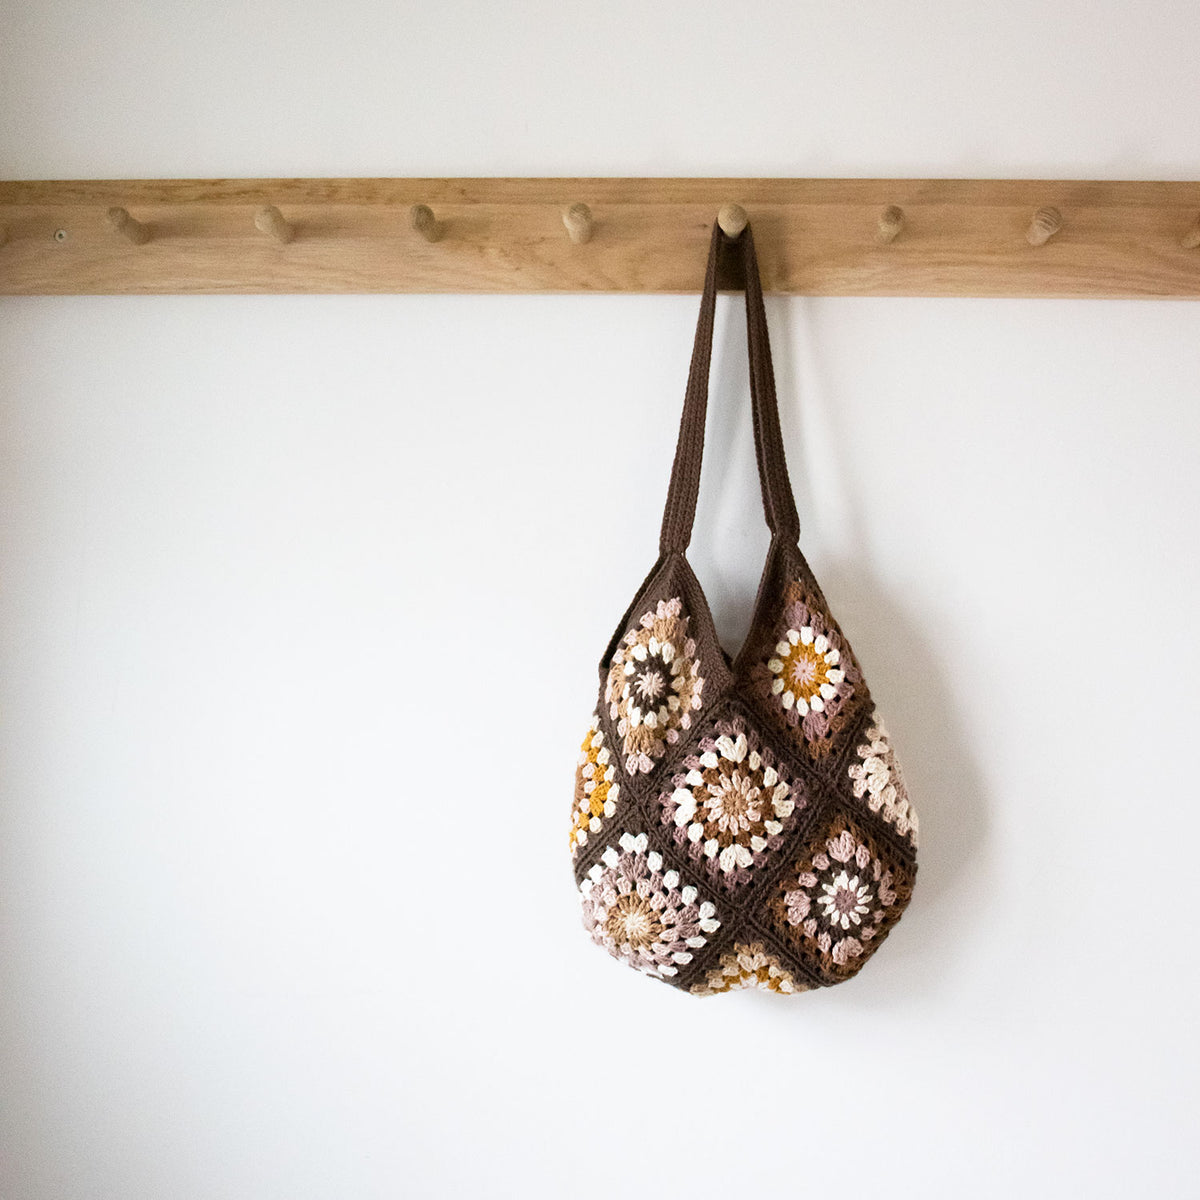 Stine's bag - Crochet kit